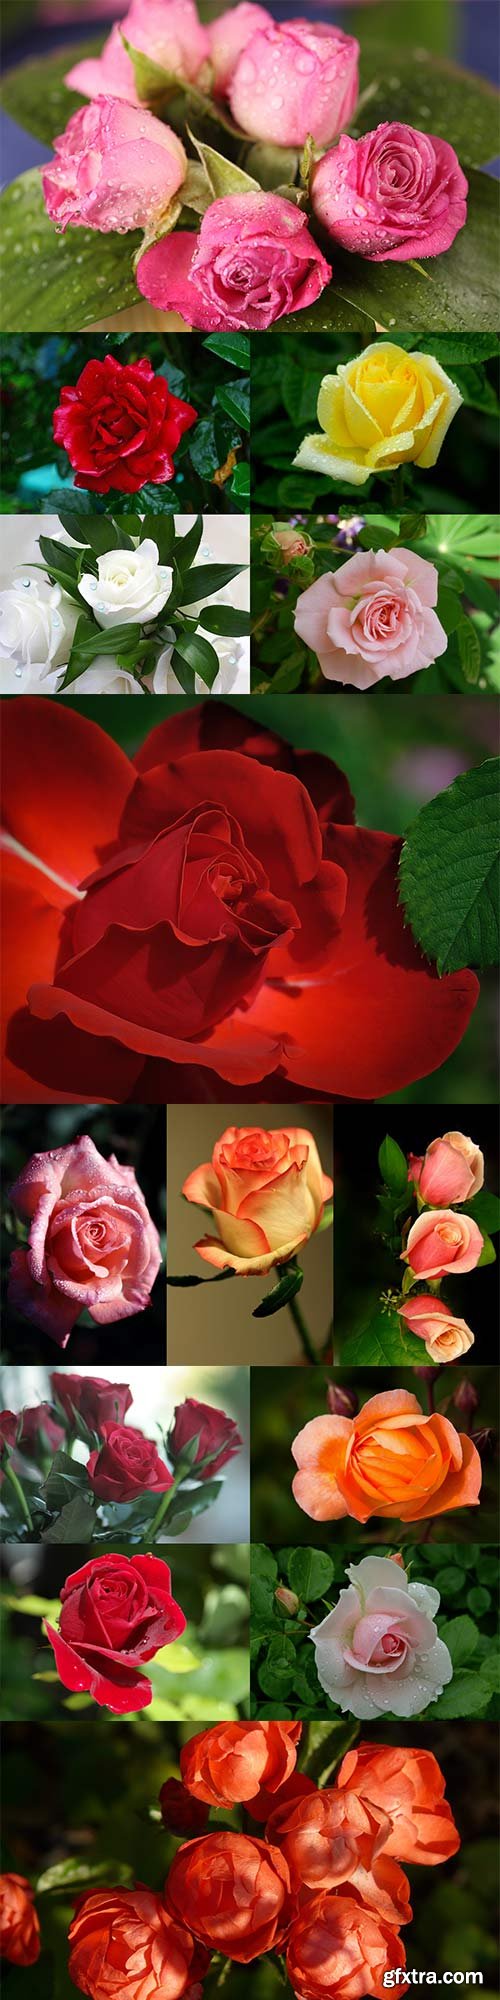 Stunning beautiful roses